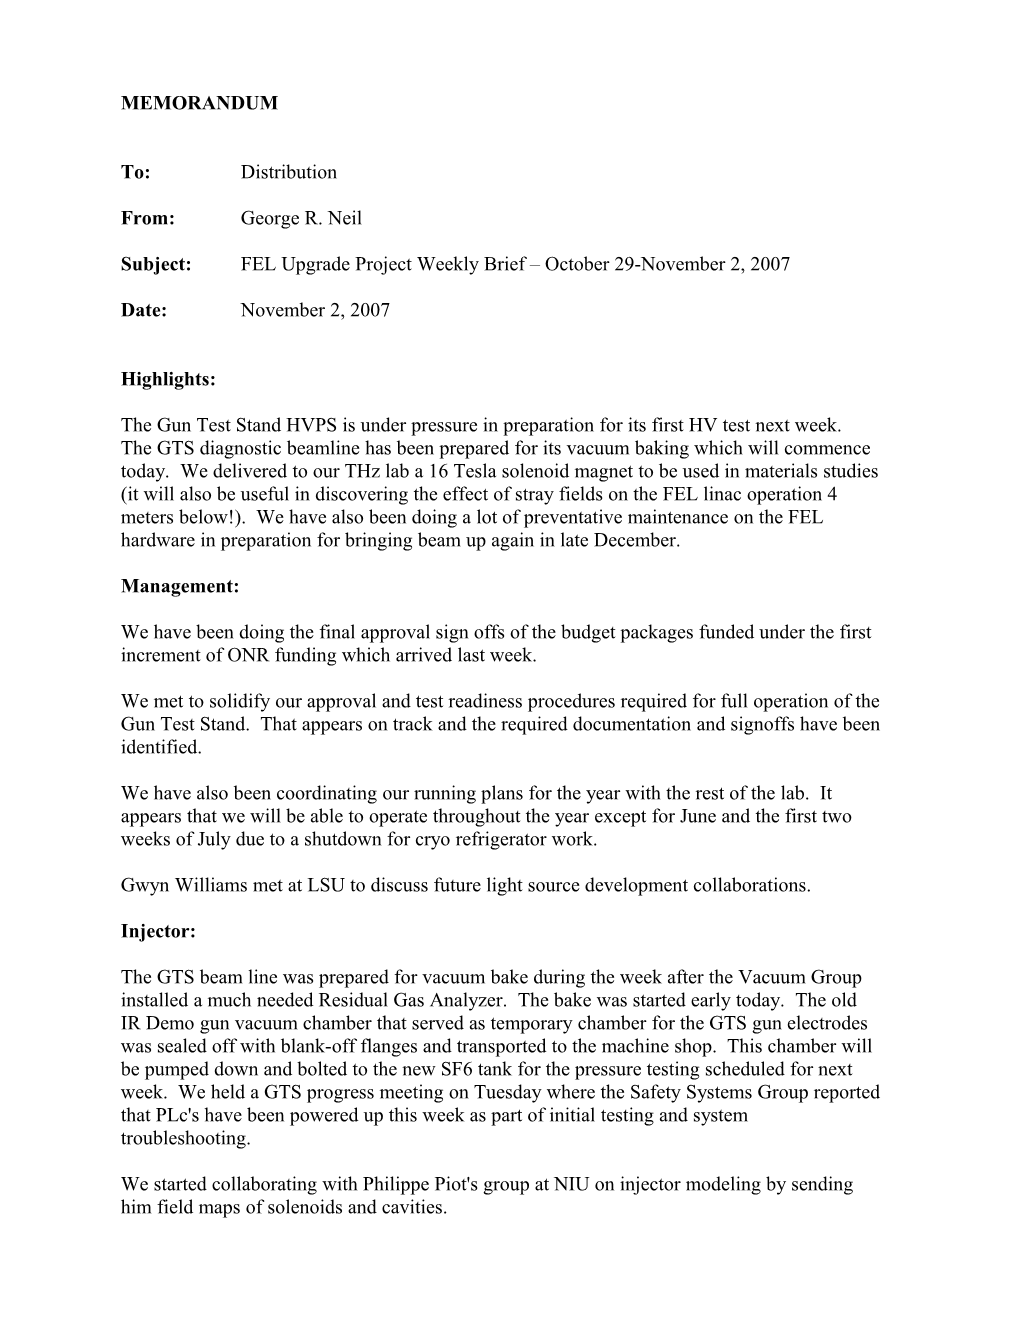 Subject:FEL Upgrade Project Weekly Brief October 29-November 2, 2007